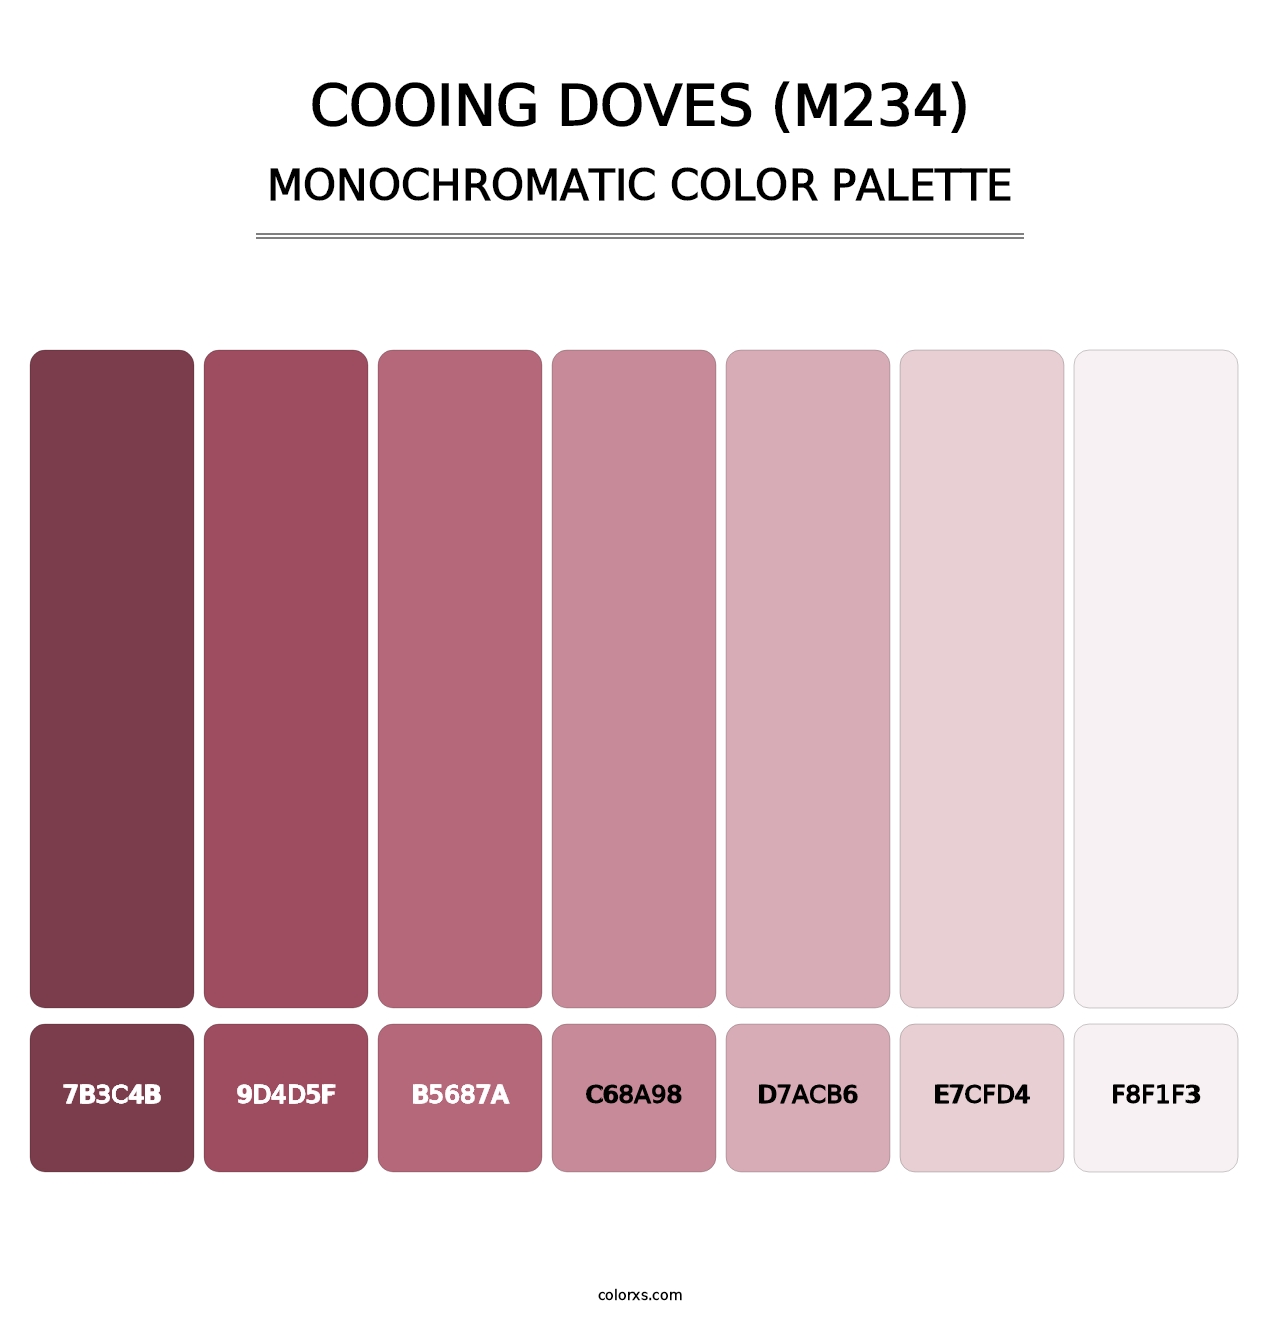 Cooing Doves (M234) - Monochromatic Color Palette